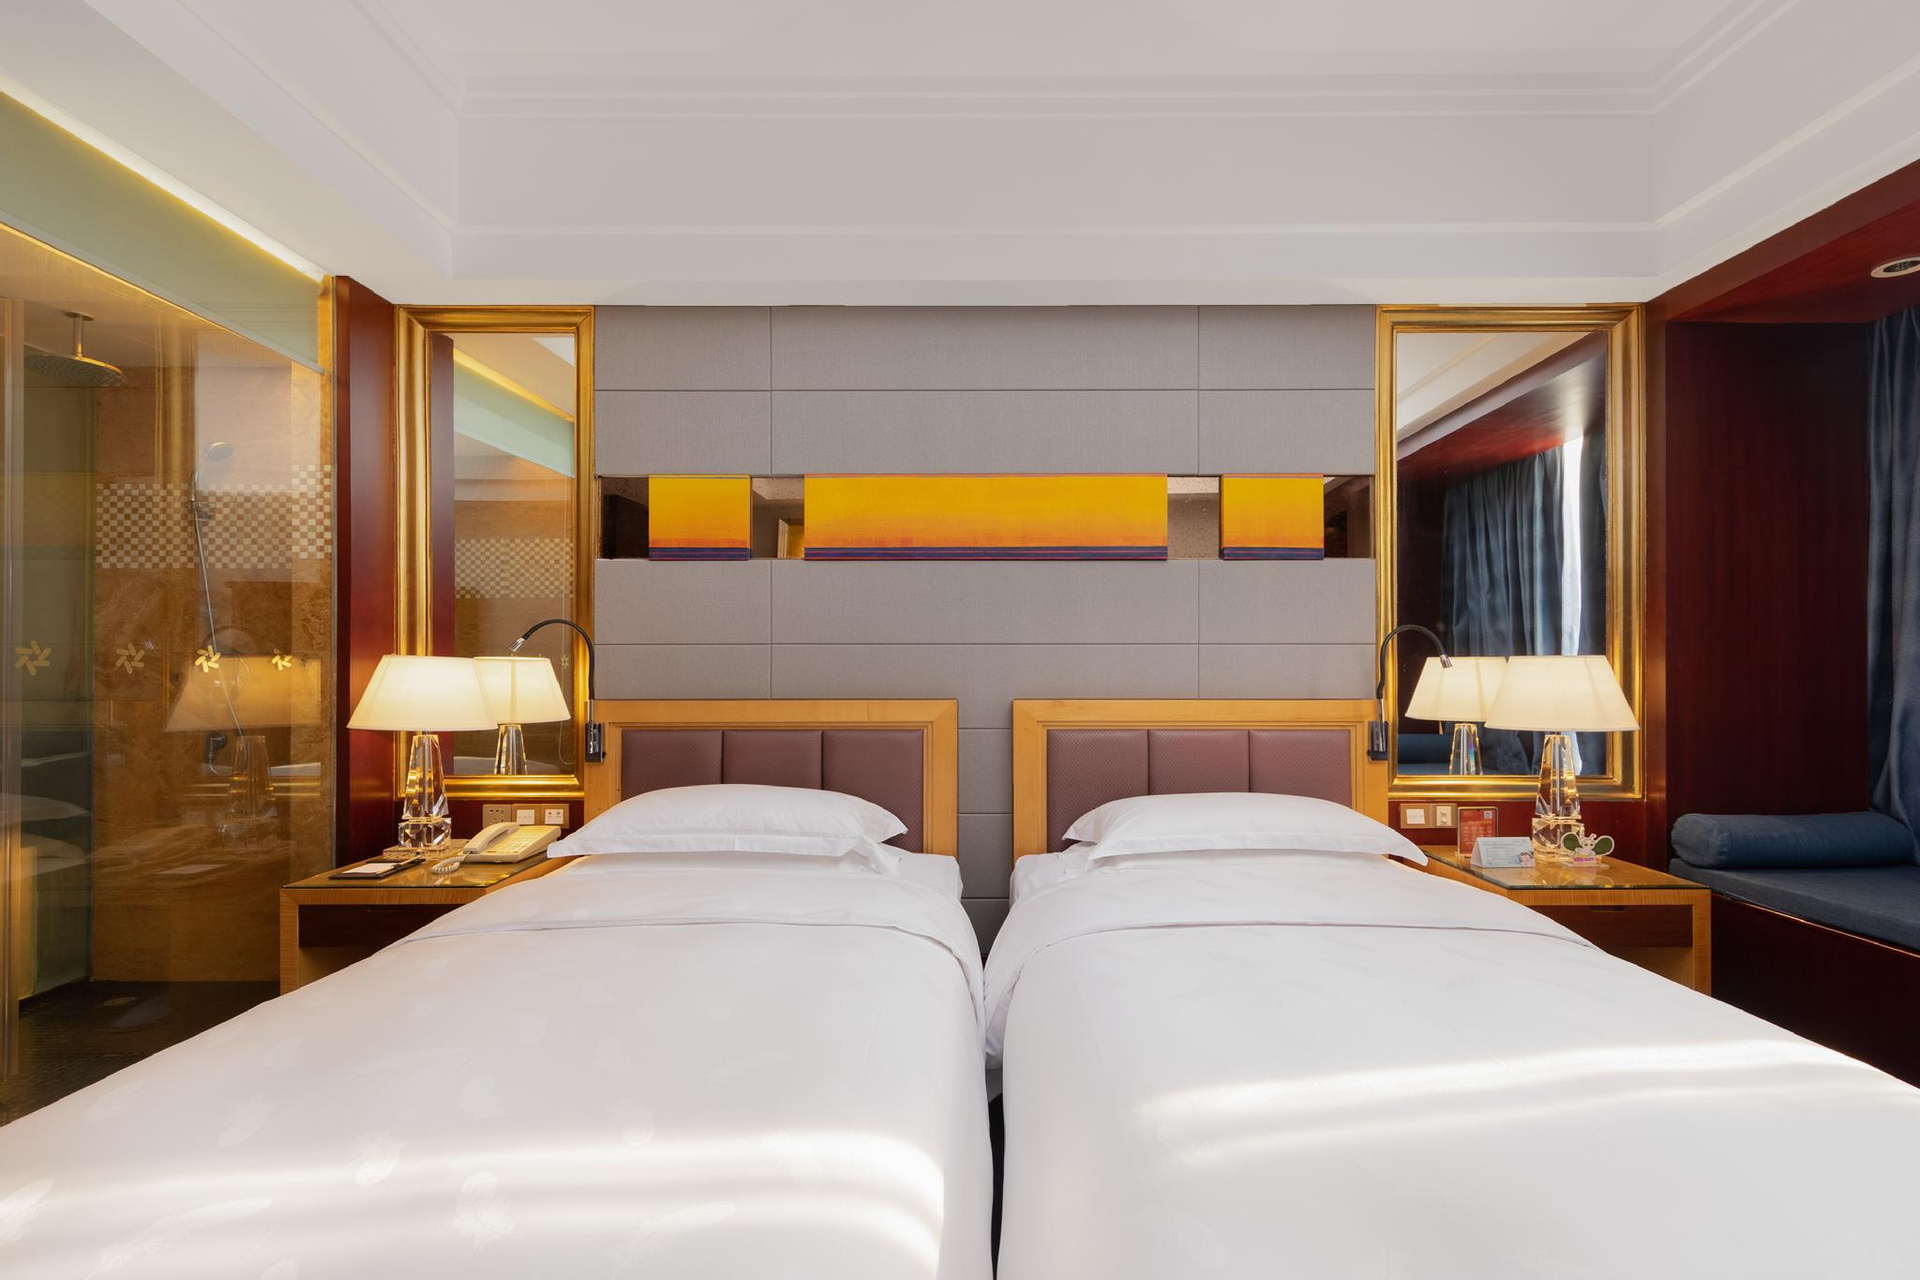 Bedroom 3, Charming Holiday Hotel, Zhuhai